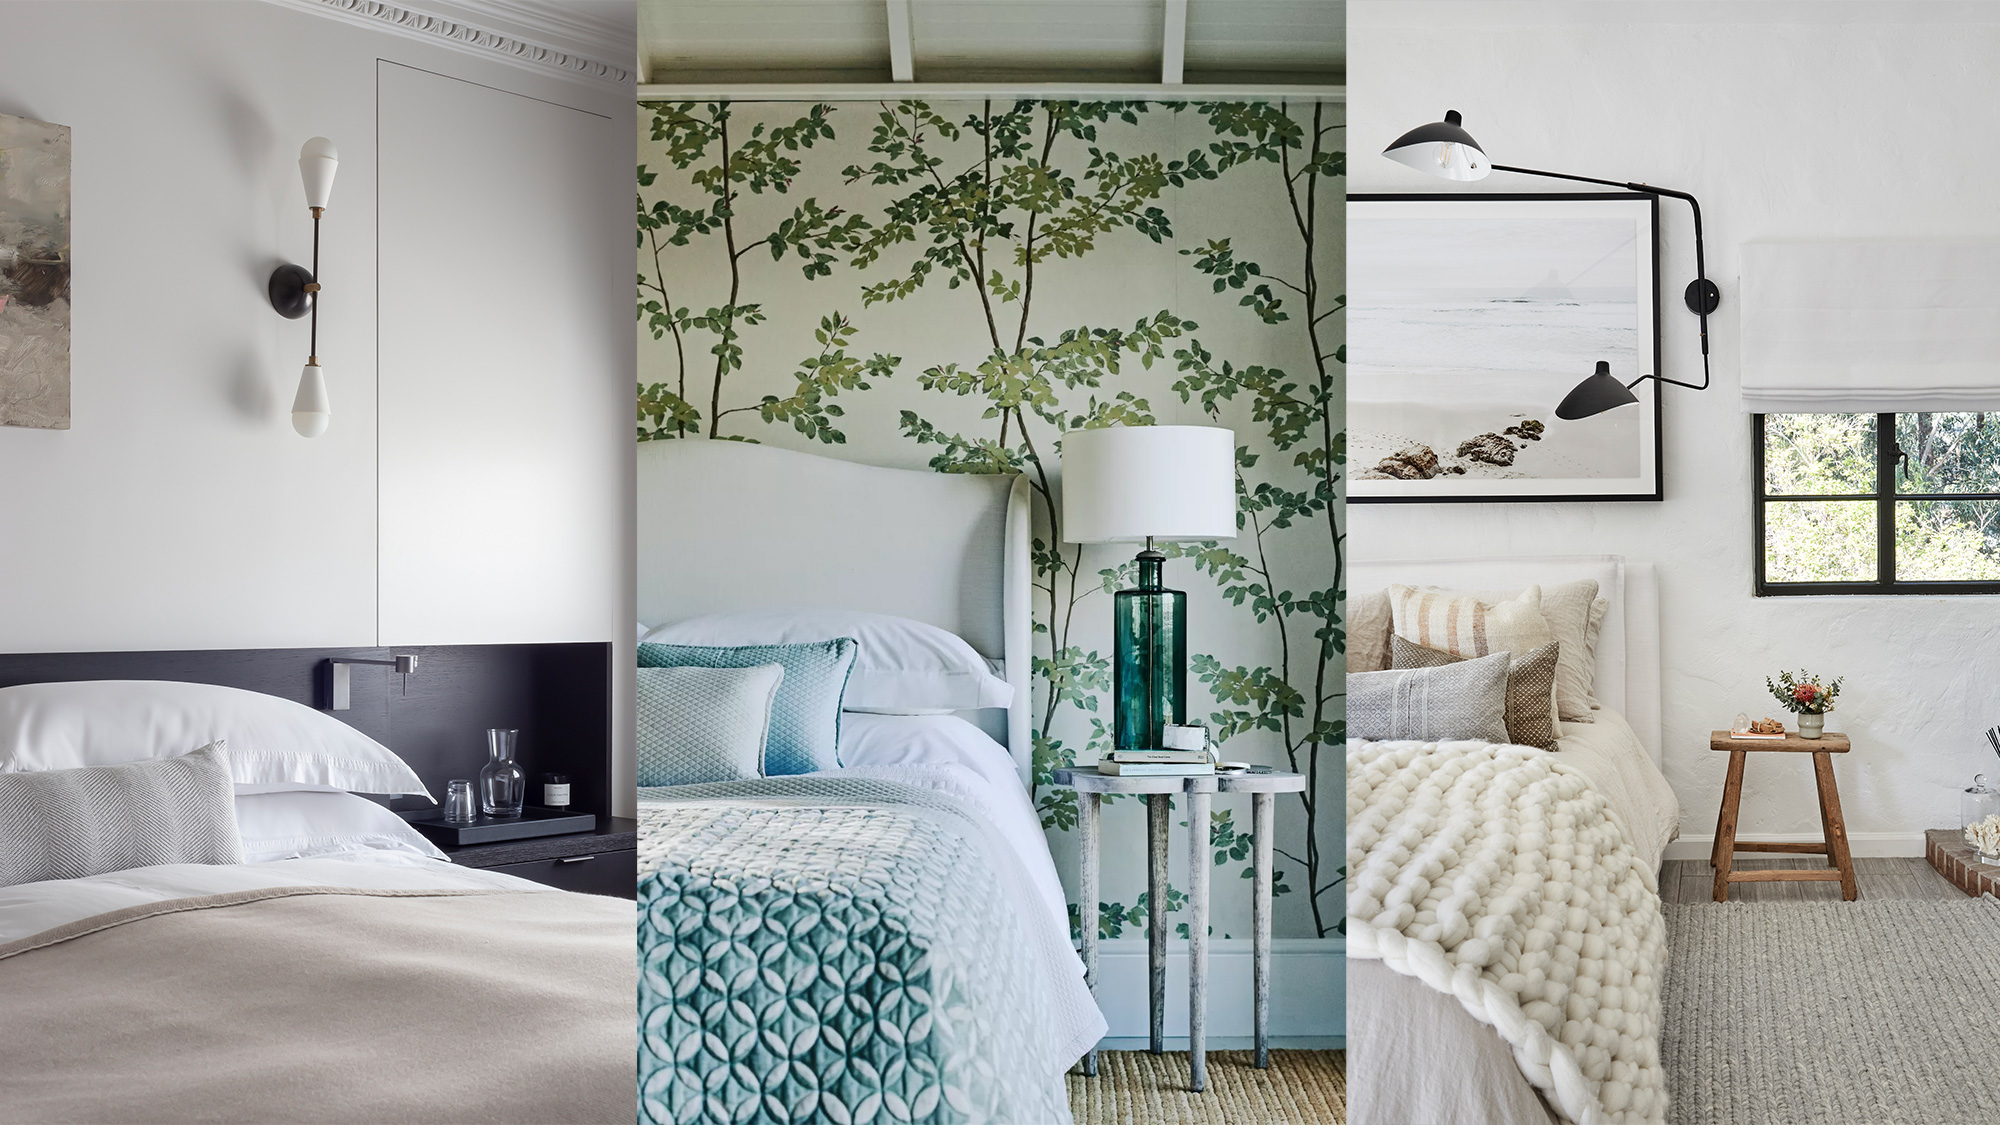 15 Bedroom wallpaper ideas for a romantic touch - COCO LAPINE DESIGNCOCO  LAPINE DESIGN